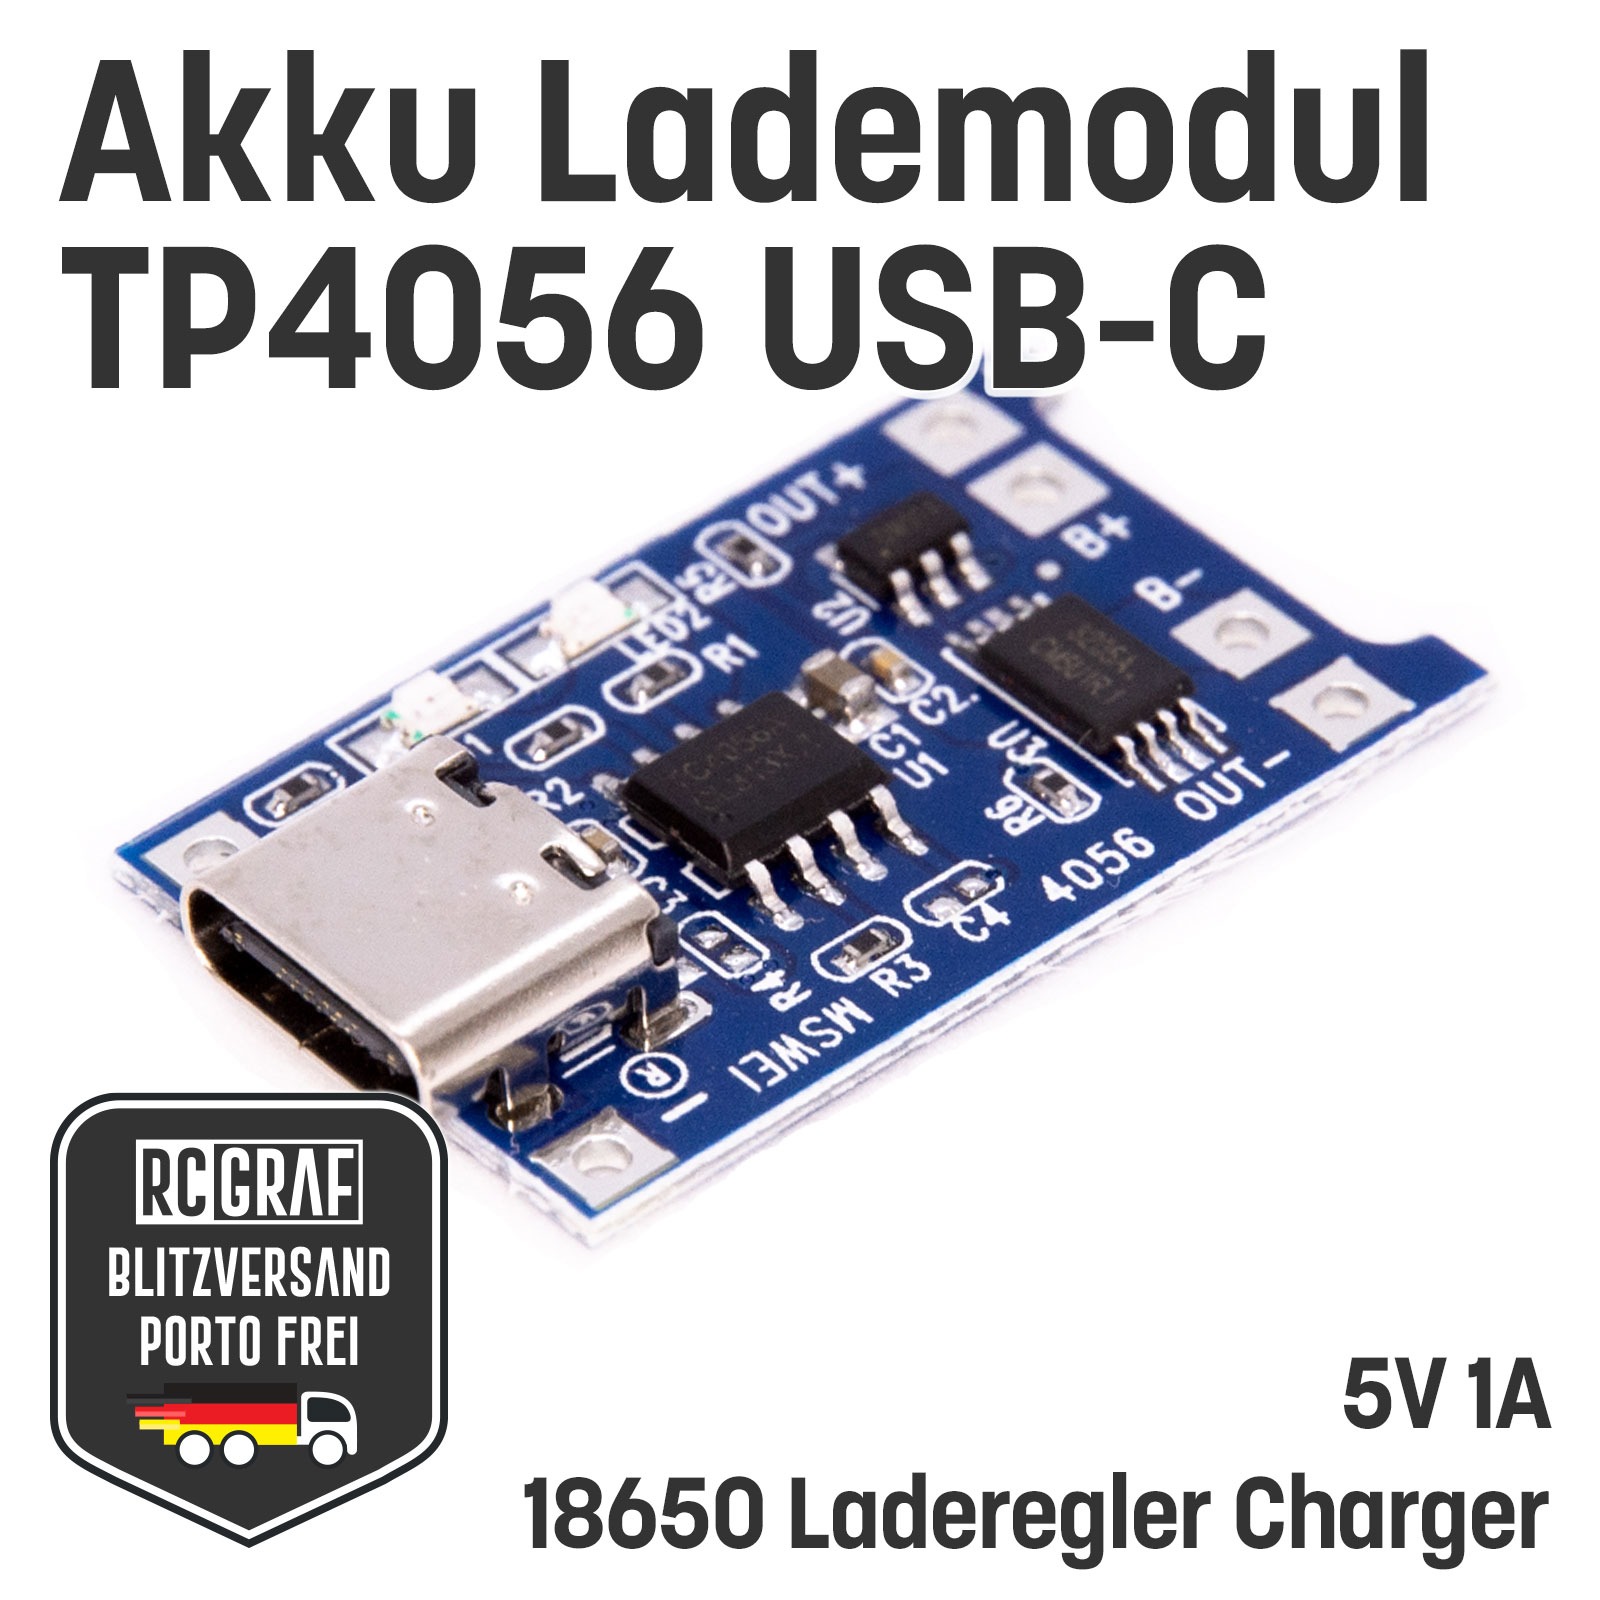 10x Akku Lademodul 5V 1A TP4056 USB C 2